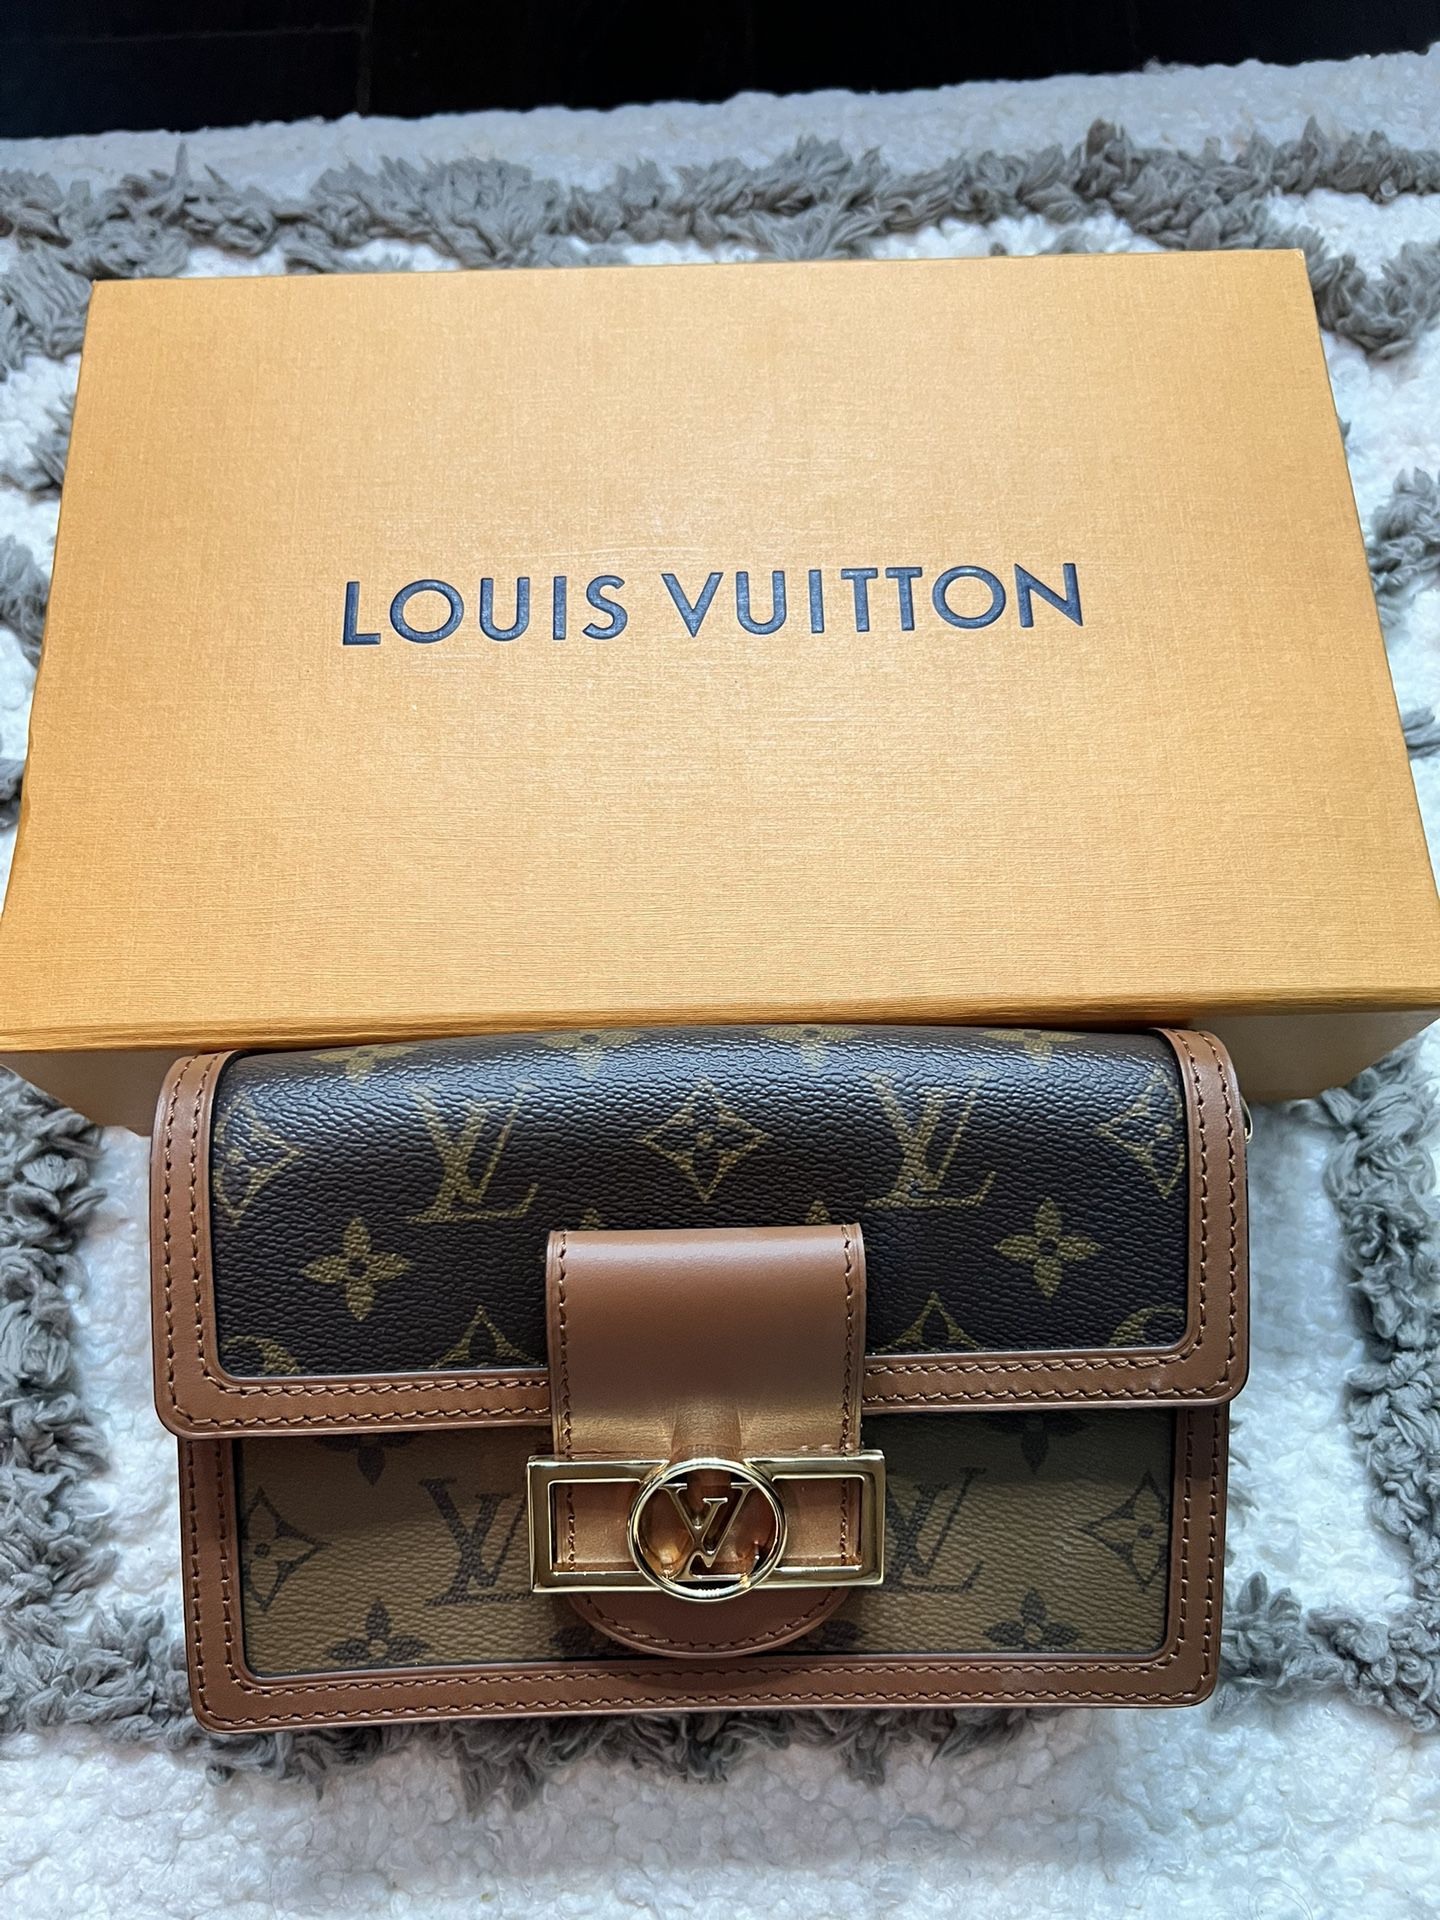 Louis Vuitton Dauphine Chain Wallet for Sale in St. Cloud, FL